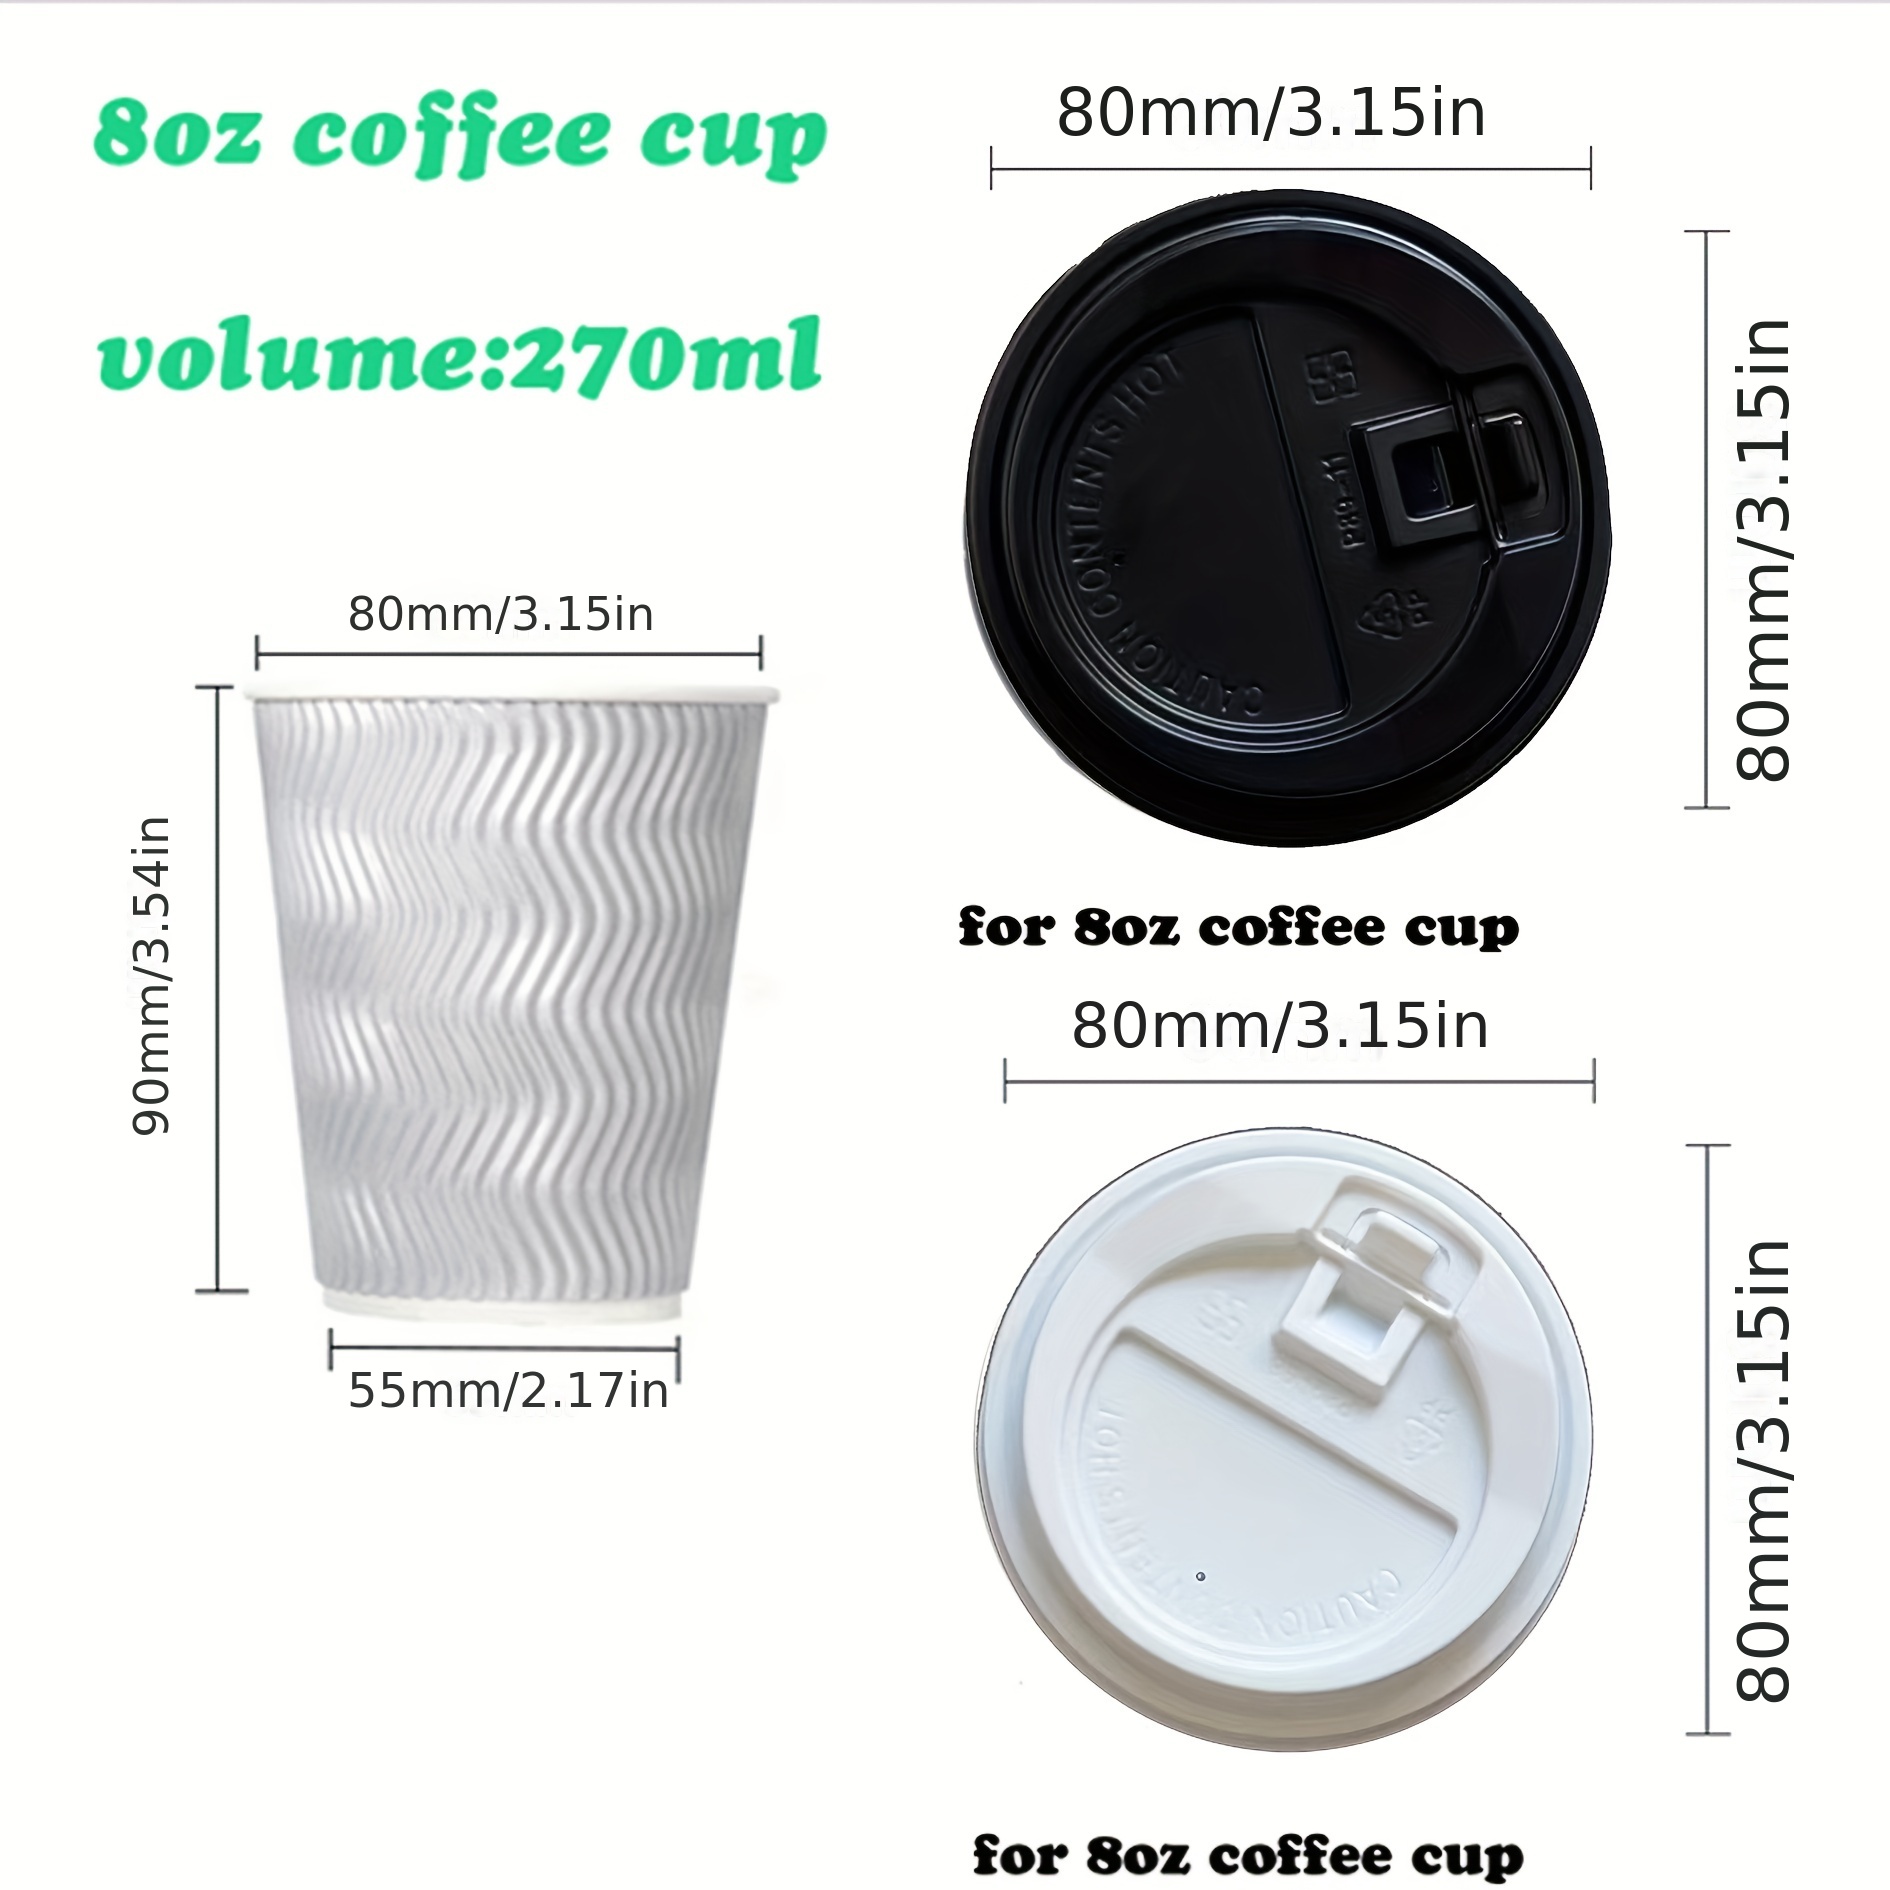 Black Corrugated Pattern Coffee Mug